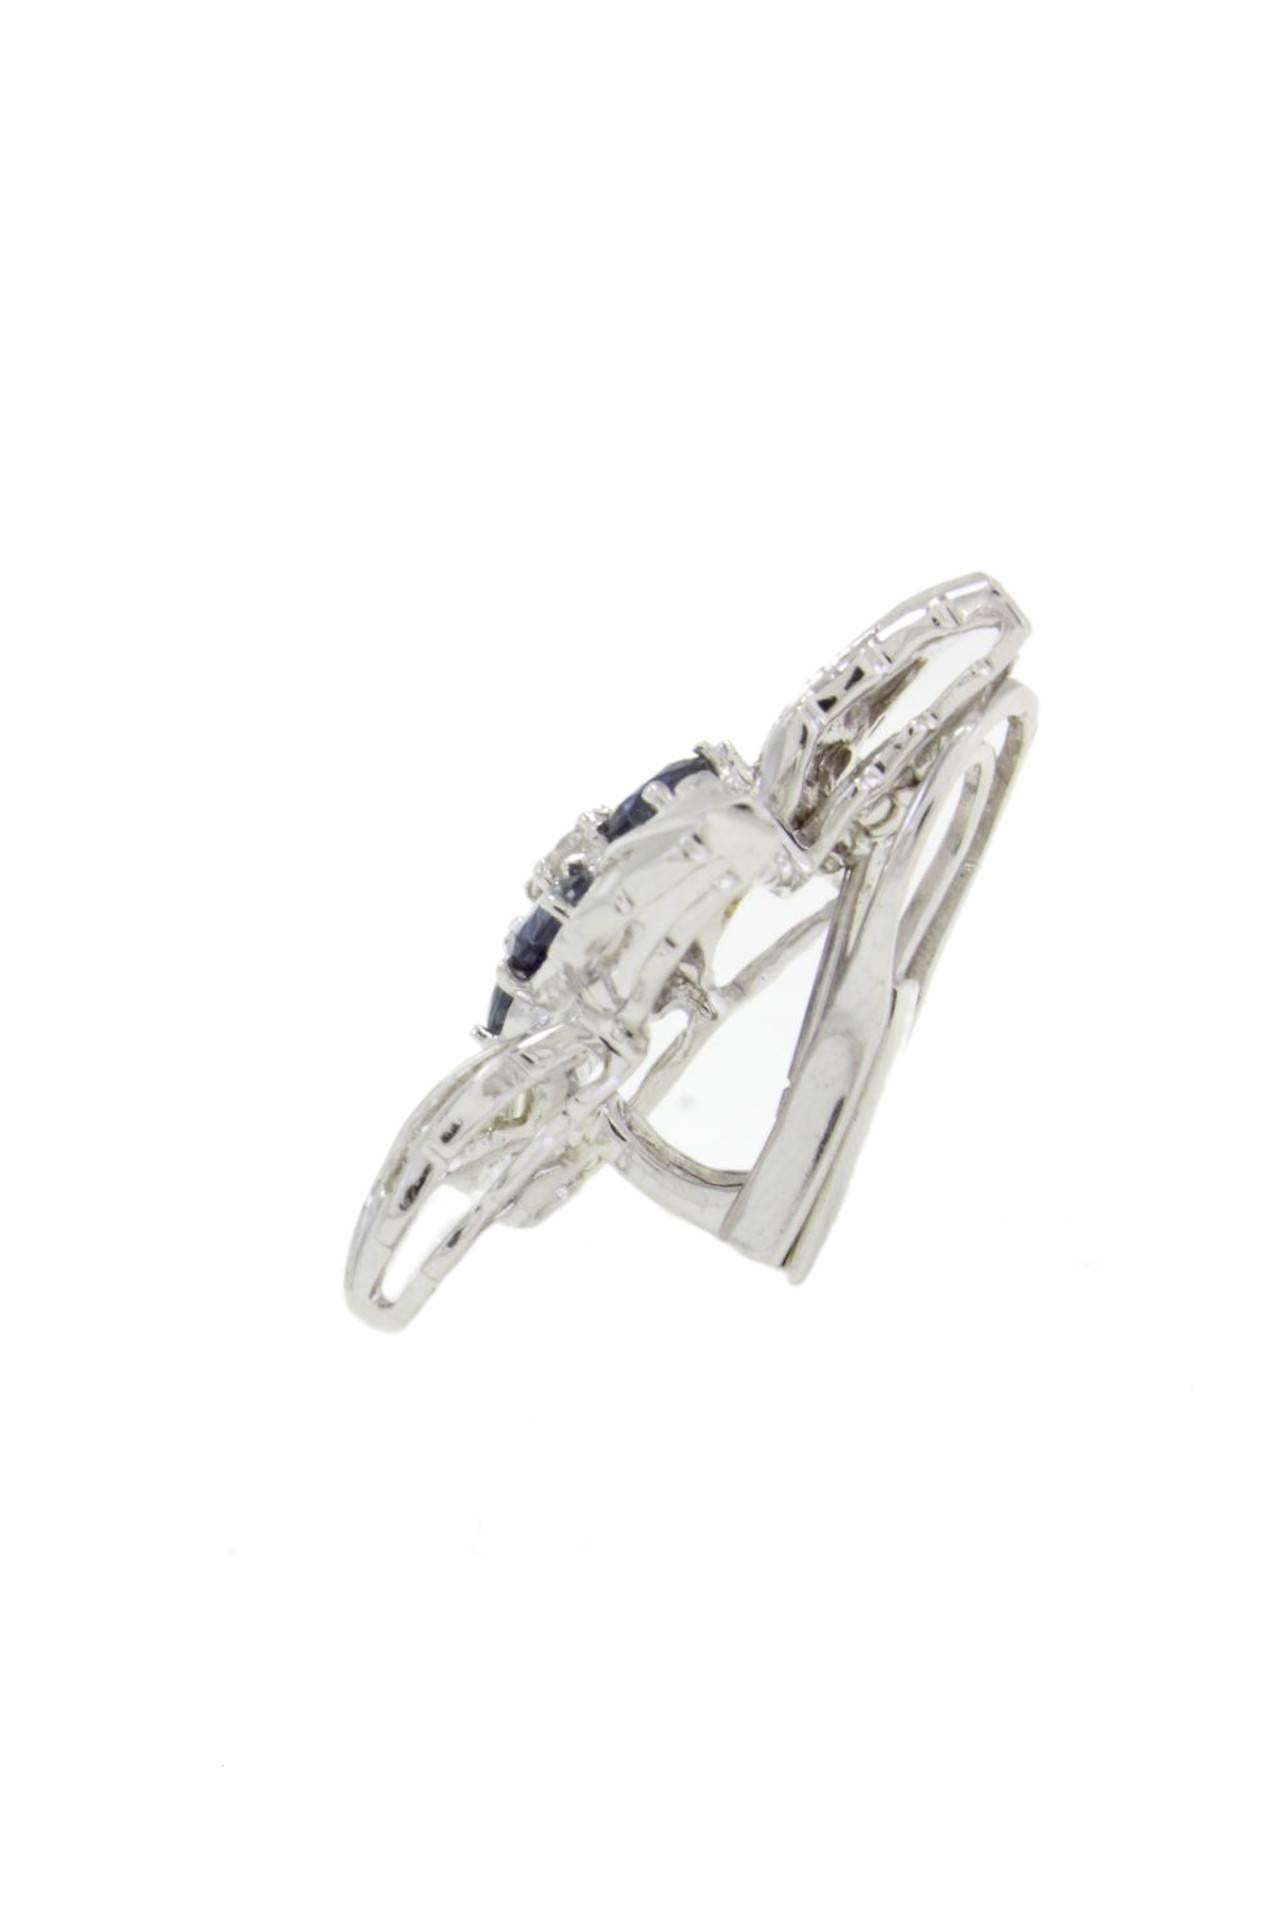  Baguette Cut Diamond Blue Sapphire Star Earrings In Good Condition For Sale In Marcianise, Marcianise (CE)